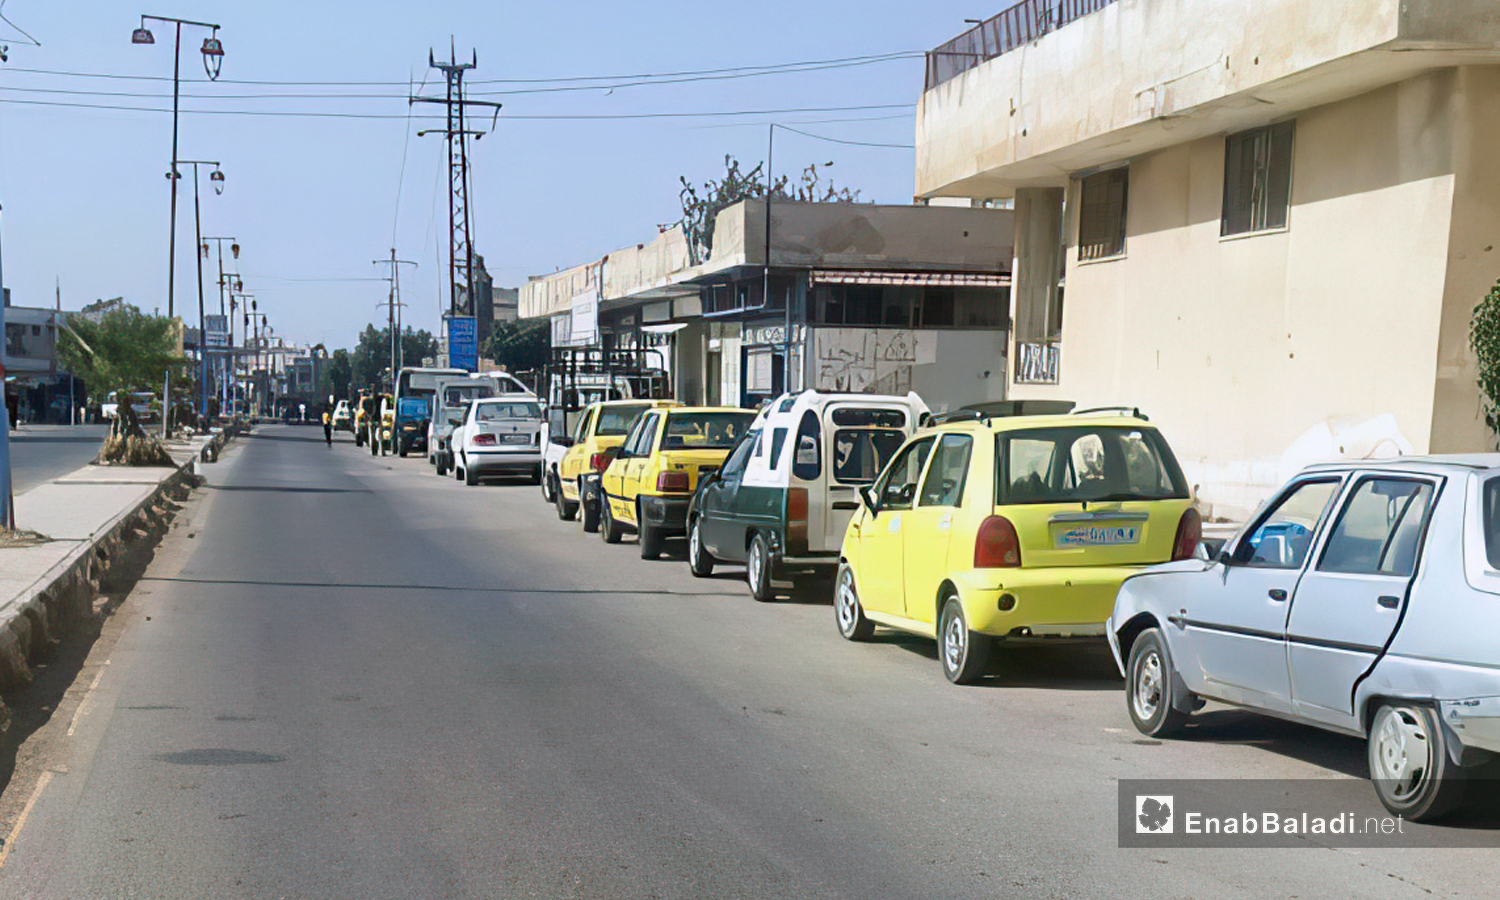 A long queue at a gas filling station in the town of Muzayrib in Daraa - September 2020 (Daraa–Halim Muhammad)